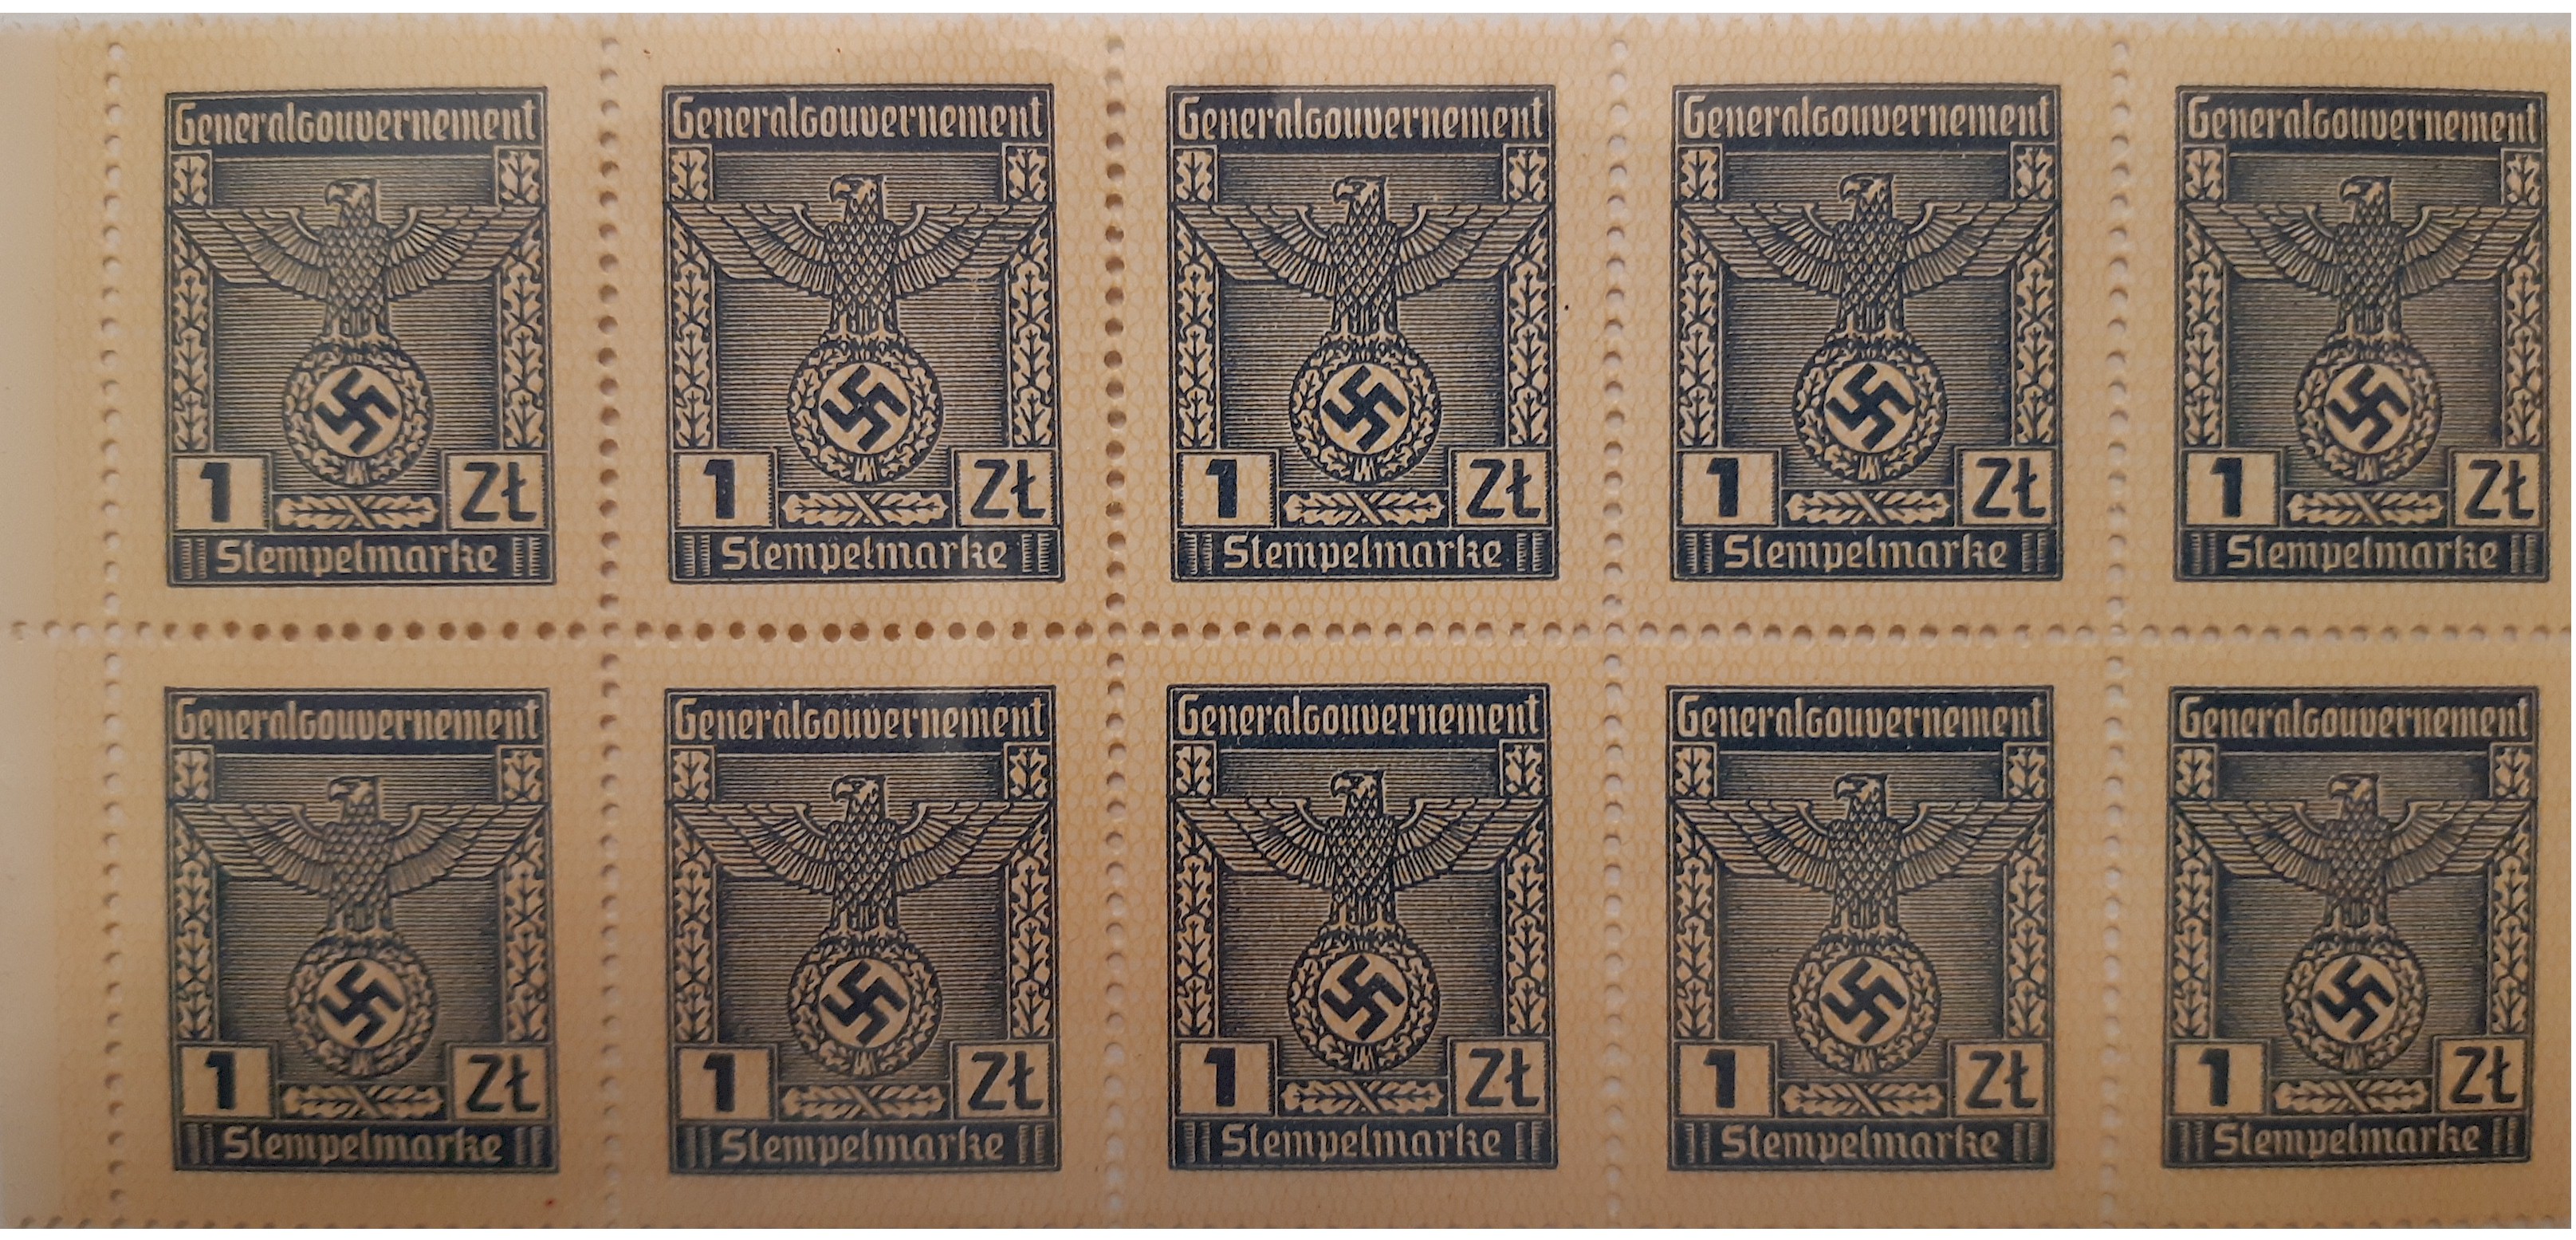 WW2 GERMAN OFFICIAL GG STEMPELMARKE STAMPS 1 ZL 1939/1945